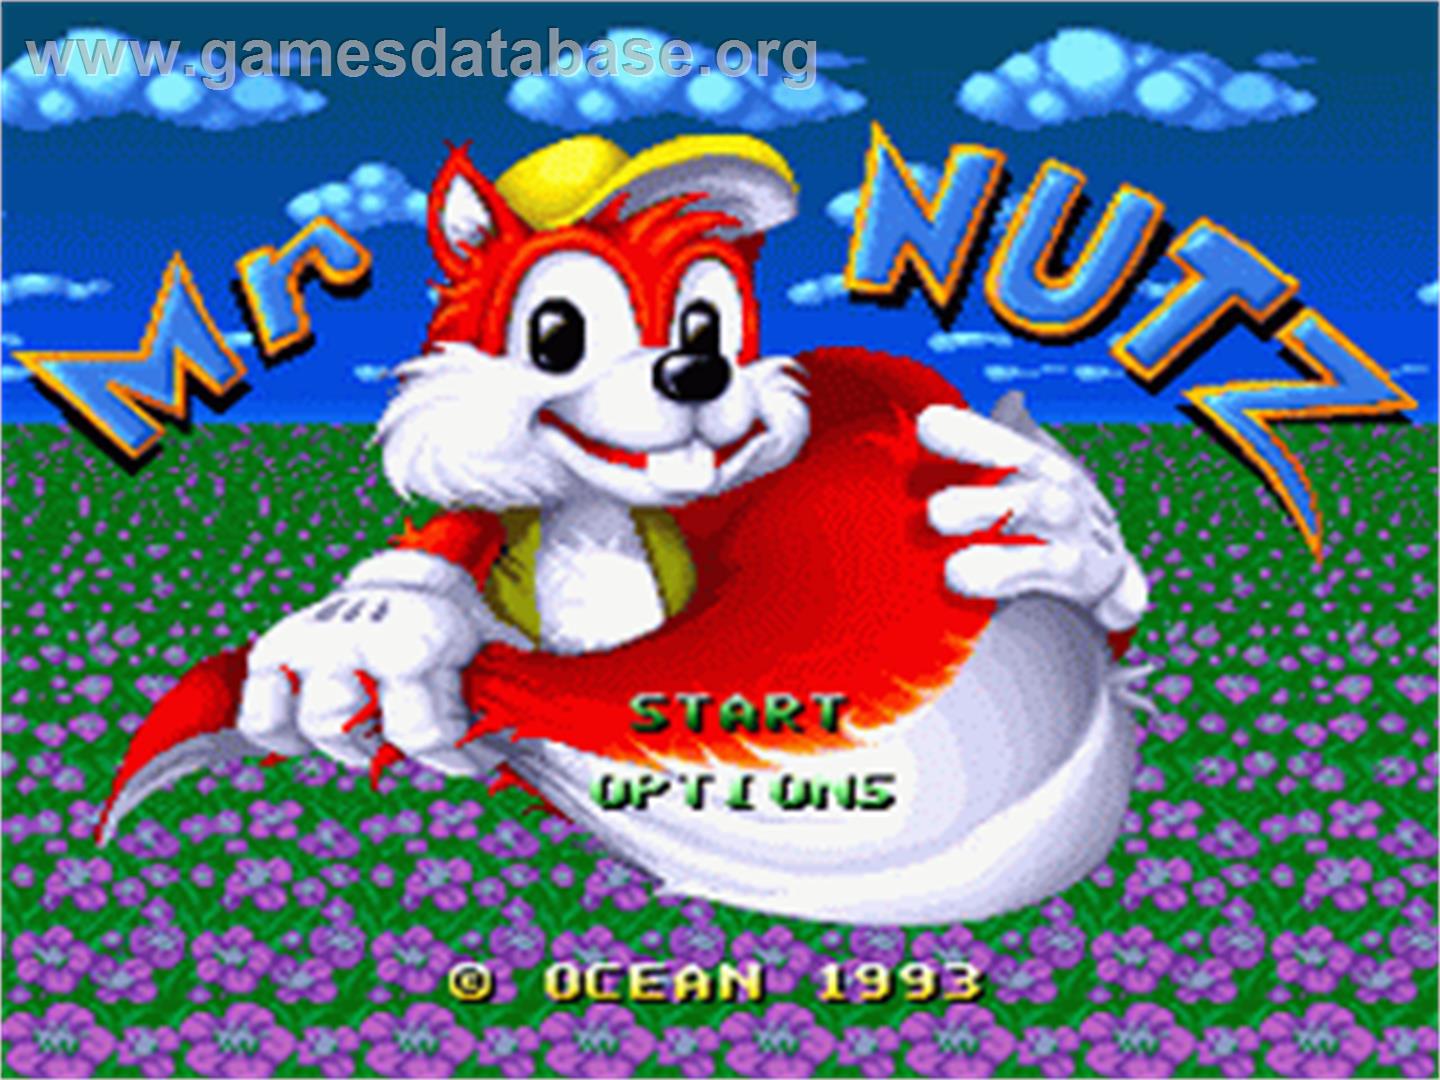 Mr. Nutz - Nintendo SNES - Artwork - Title Screen